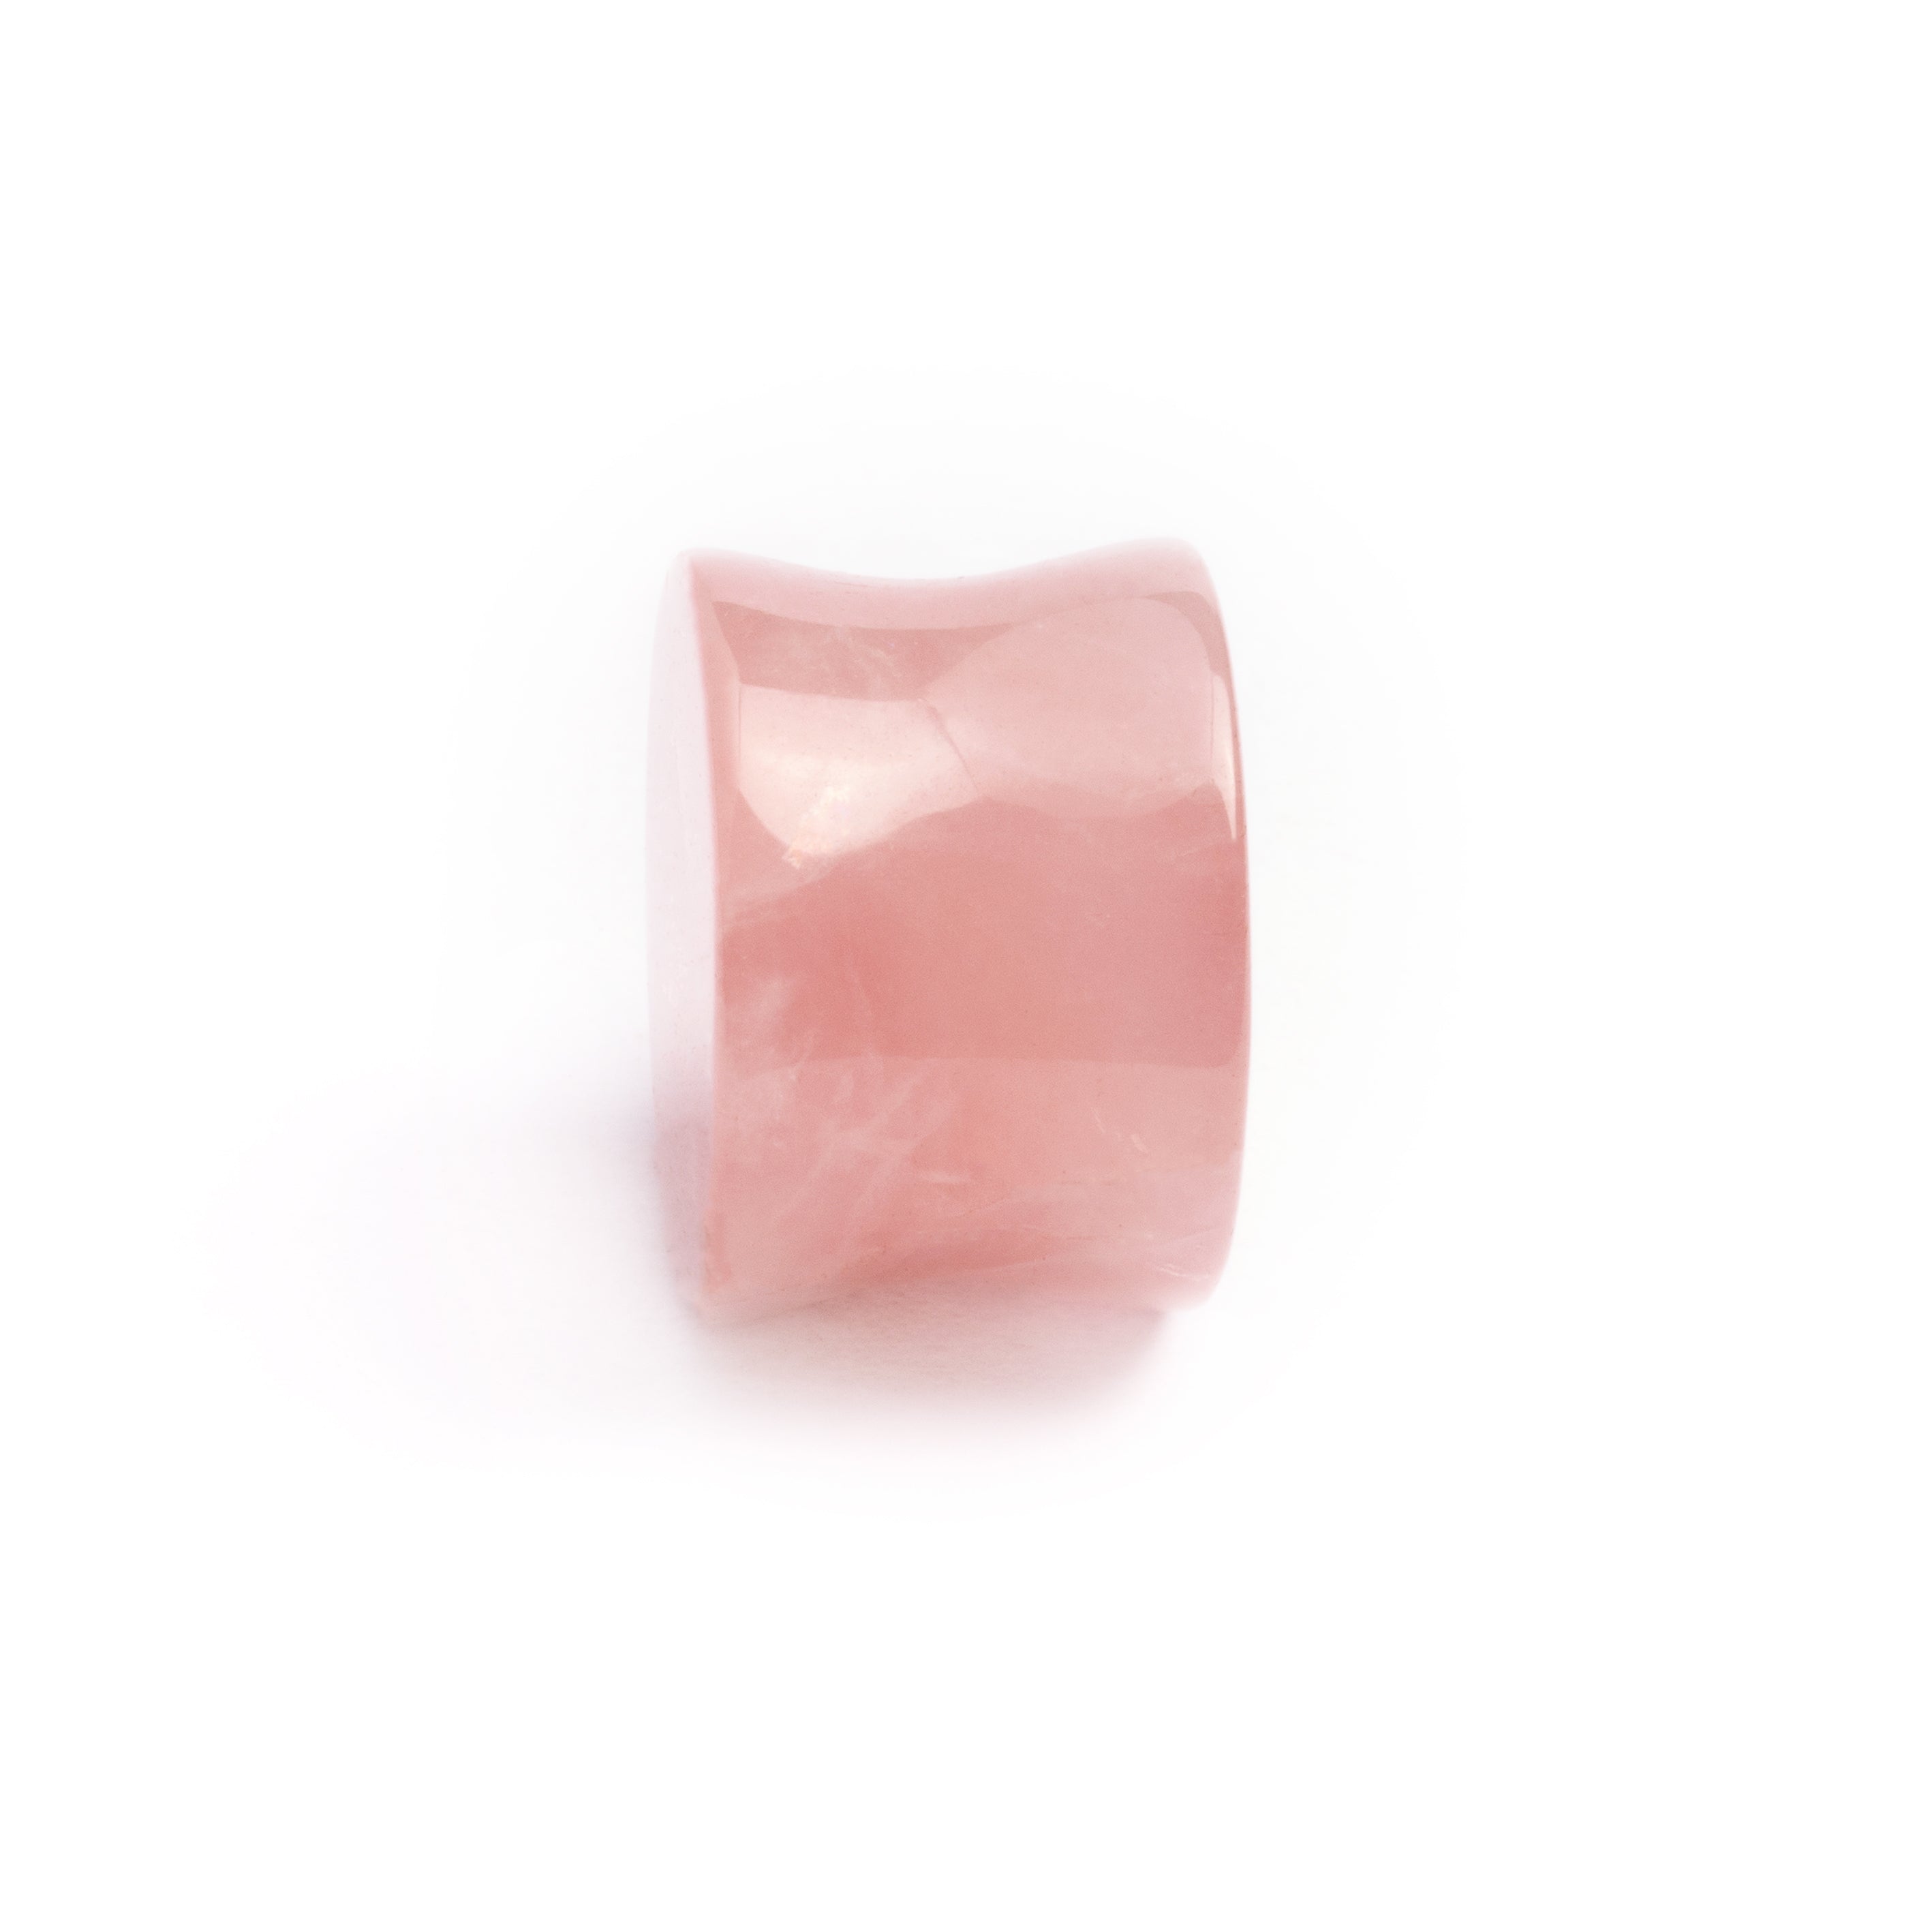 single rose quartz double flare stone ear plug 